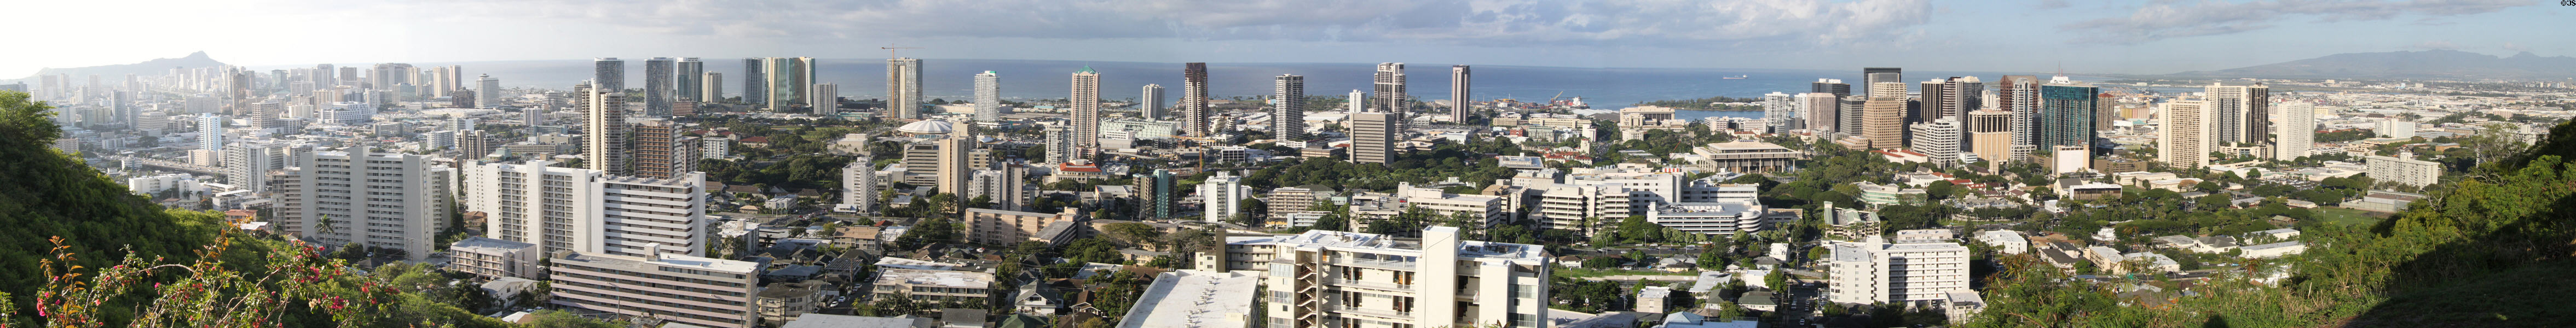 Panorama of Waikiki through downtown Honolulu from rim of Punchbowl Crater. Honolulu, HI.